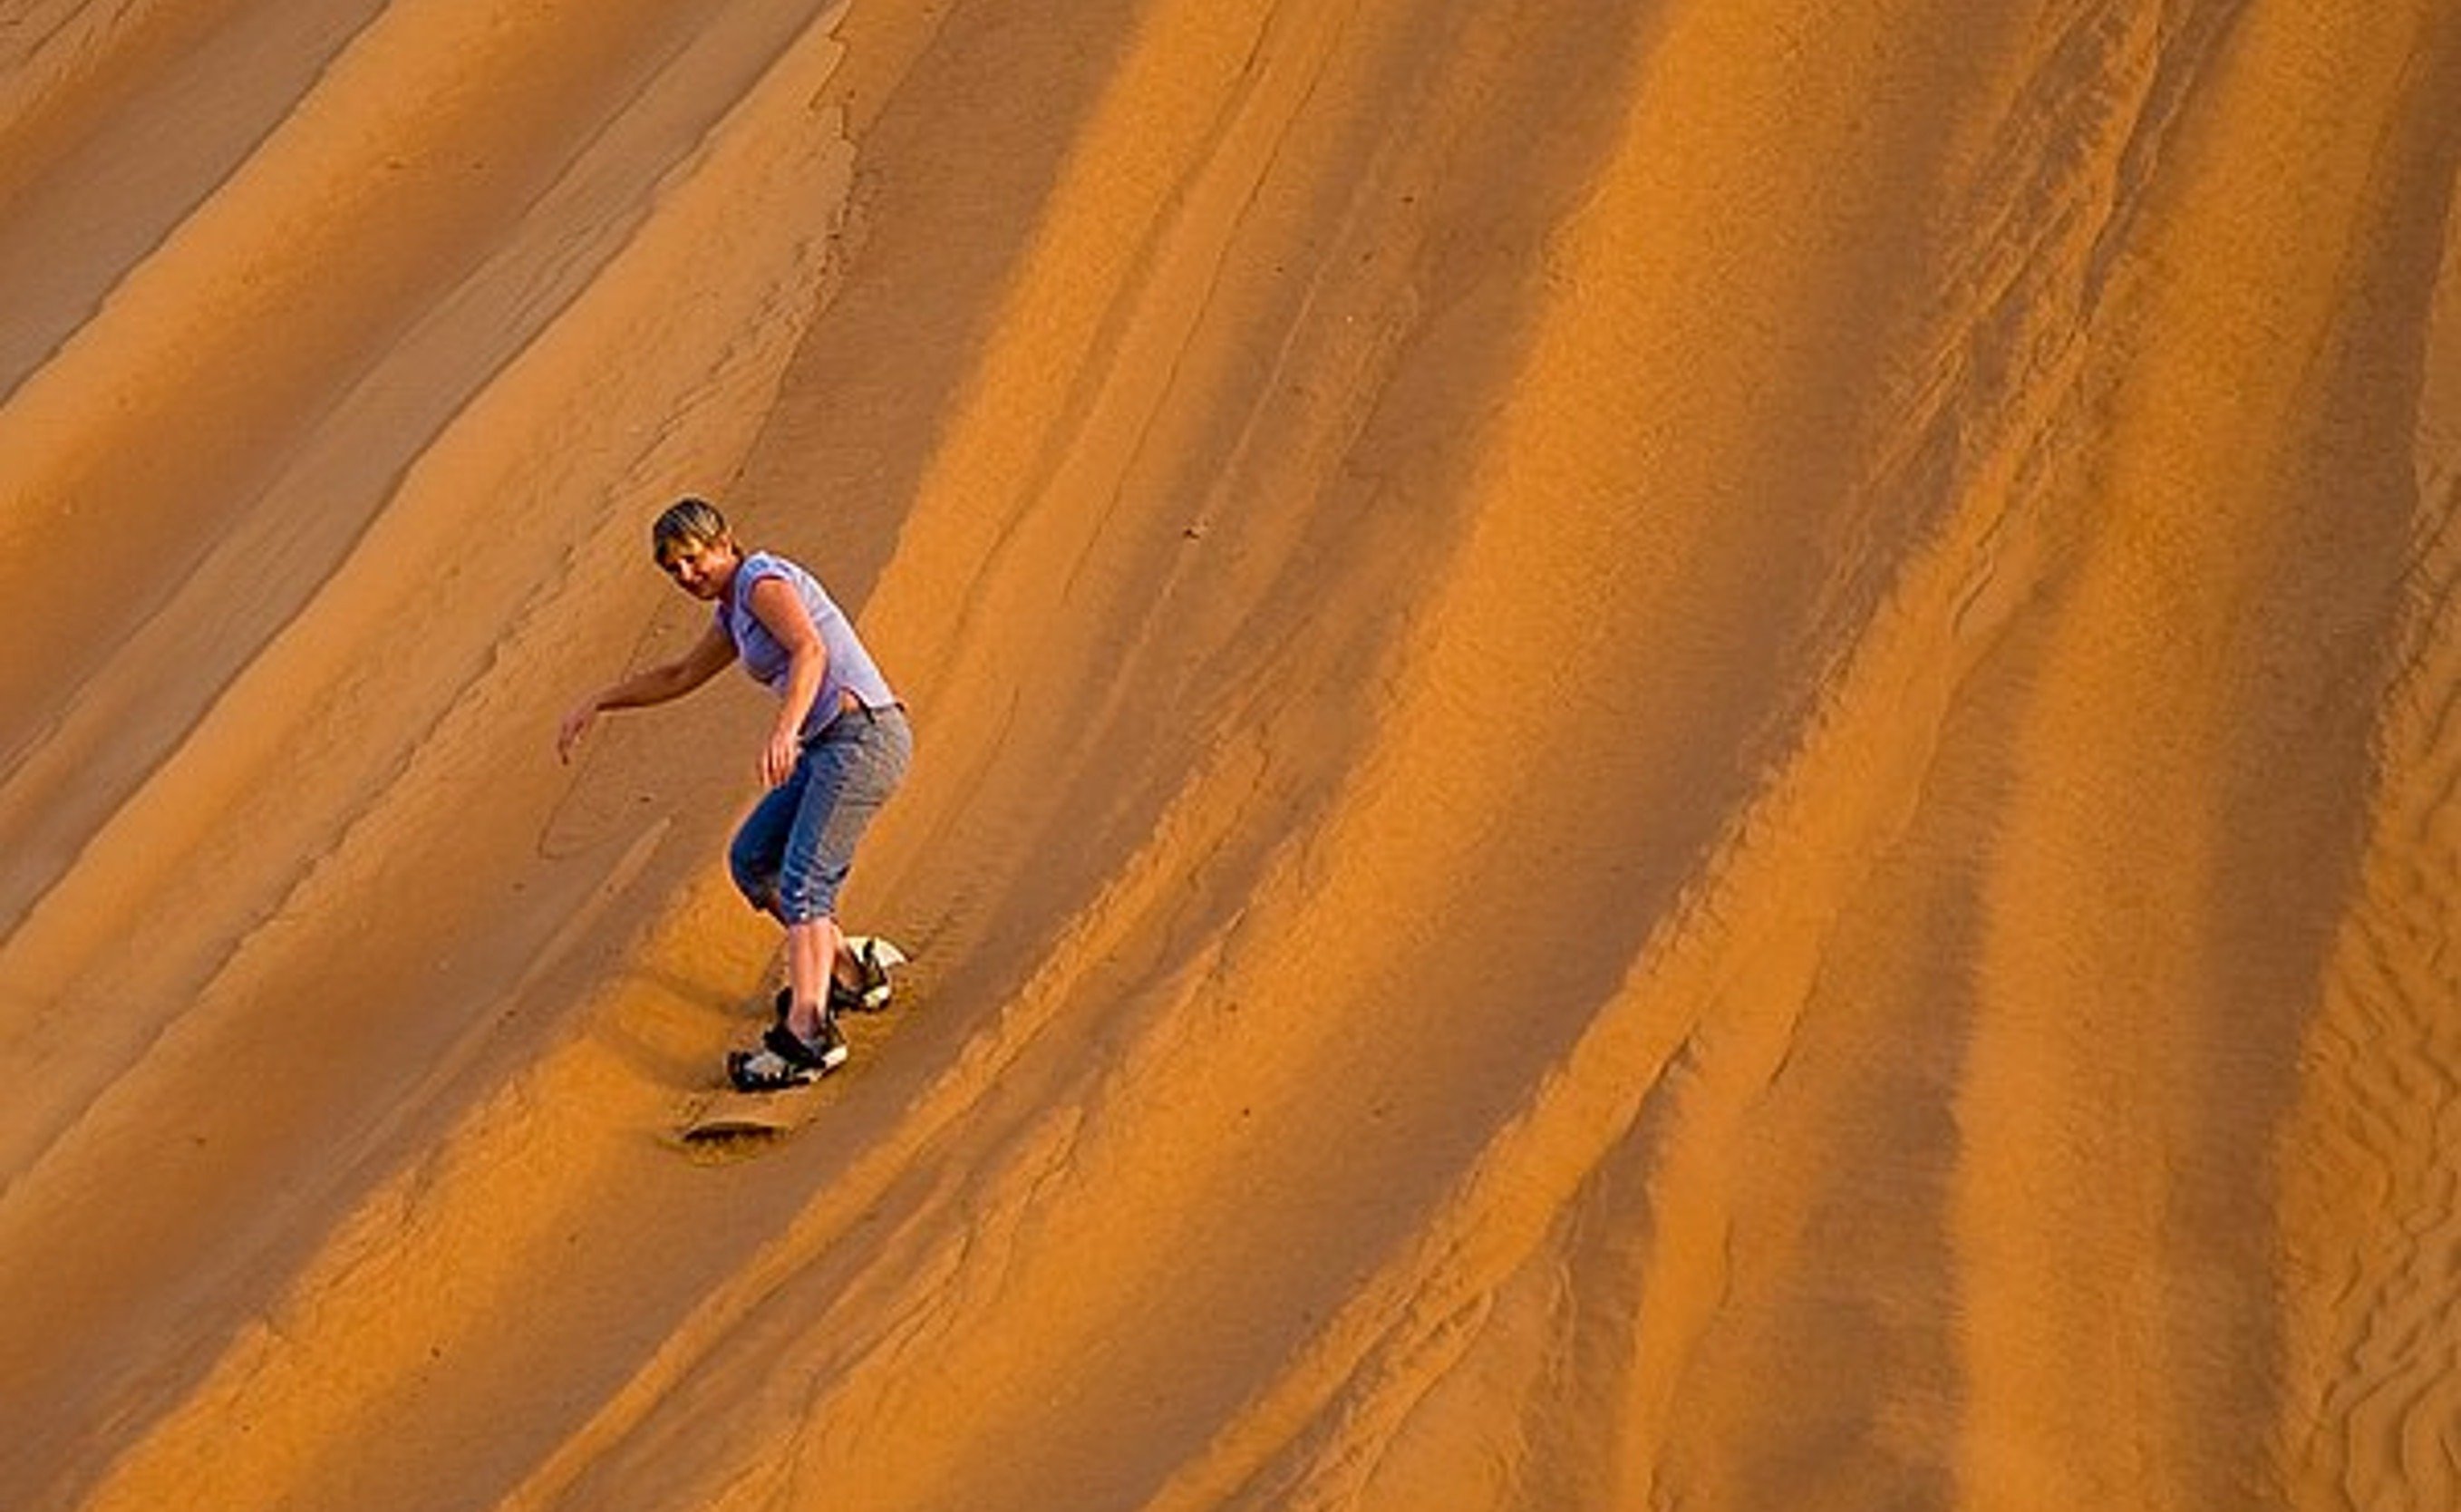 Sandboarding at Wahiba Sands, Oman.